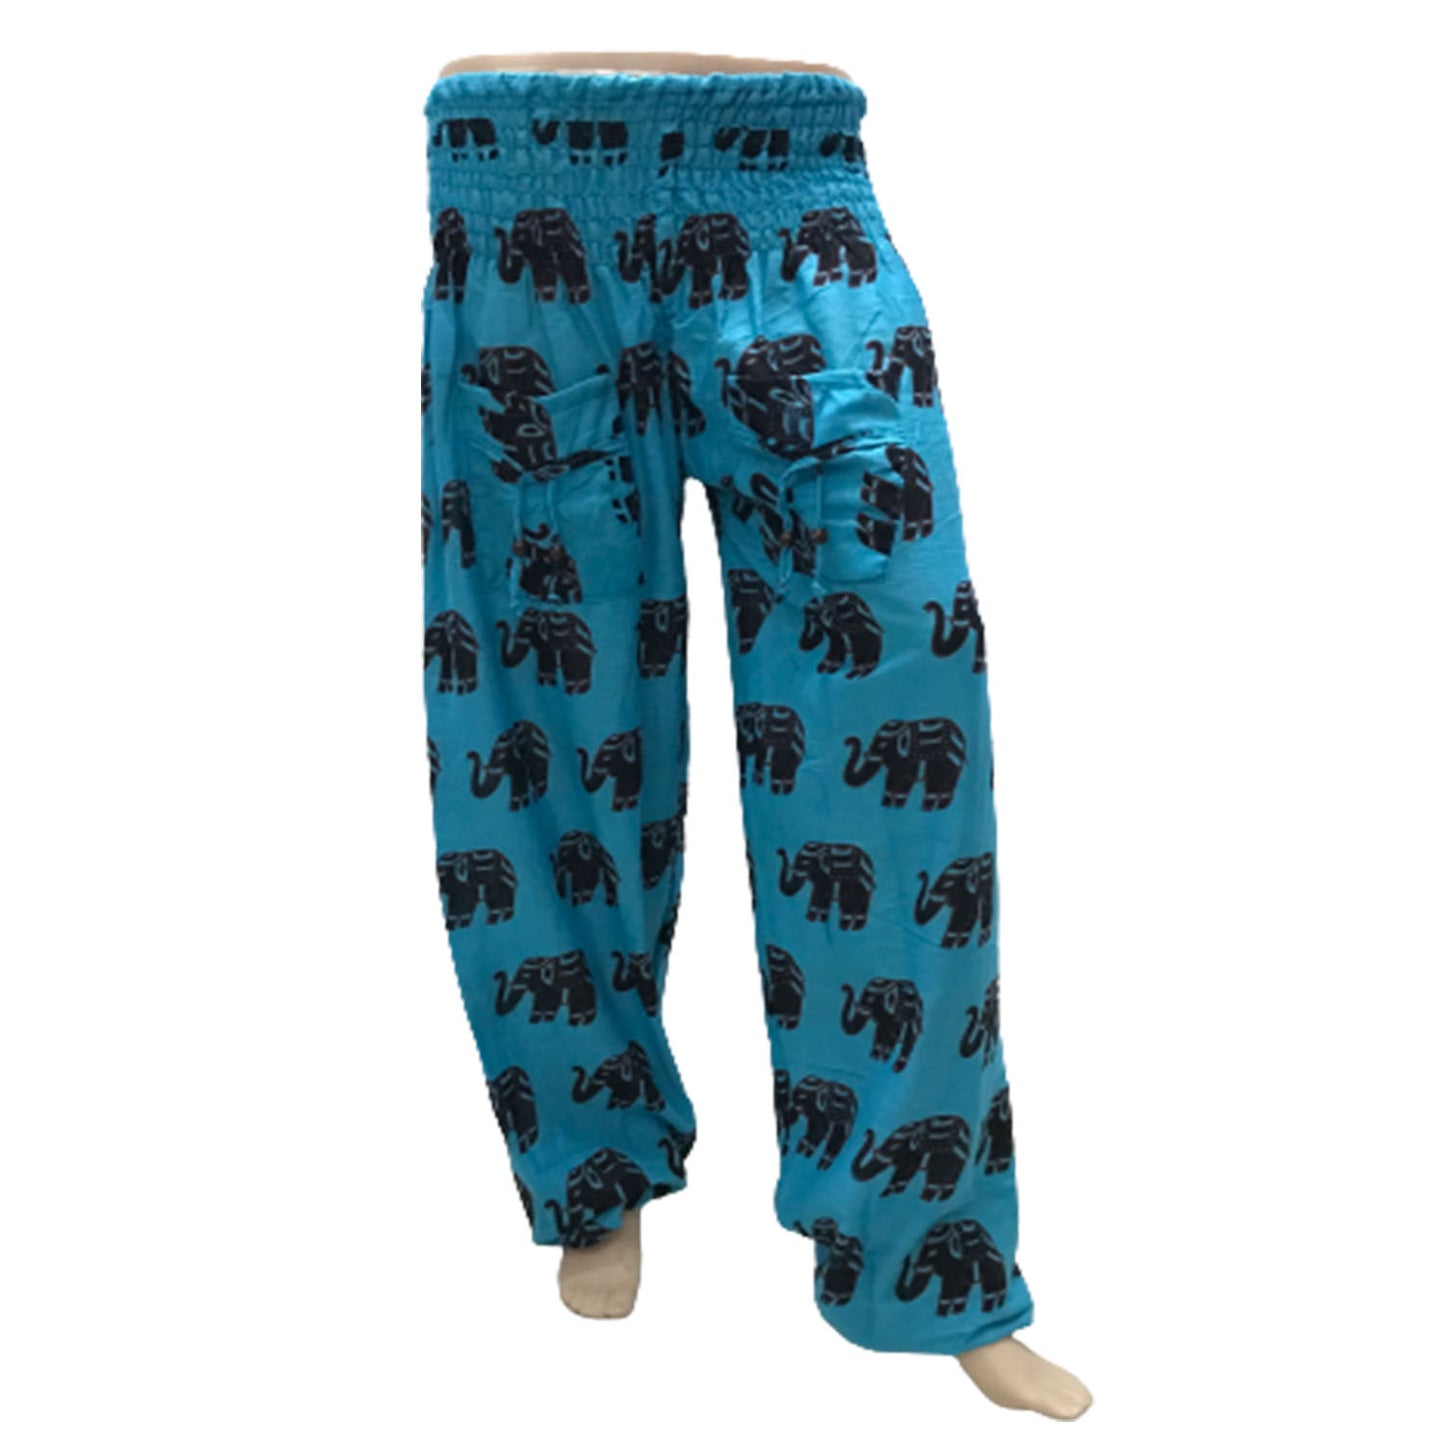 Ganesha Handicrafts, Cuffed Elephant Print Casual Trousers, Cuffed Casual Trousers, Elephant Print Trousers, Light Blue colour Cuffed Elephant Print Casual Trousers.